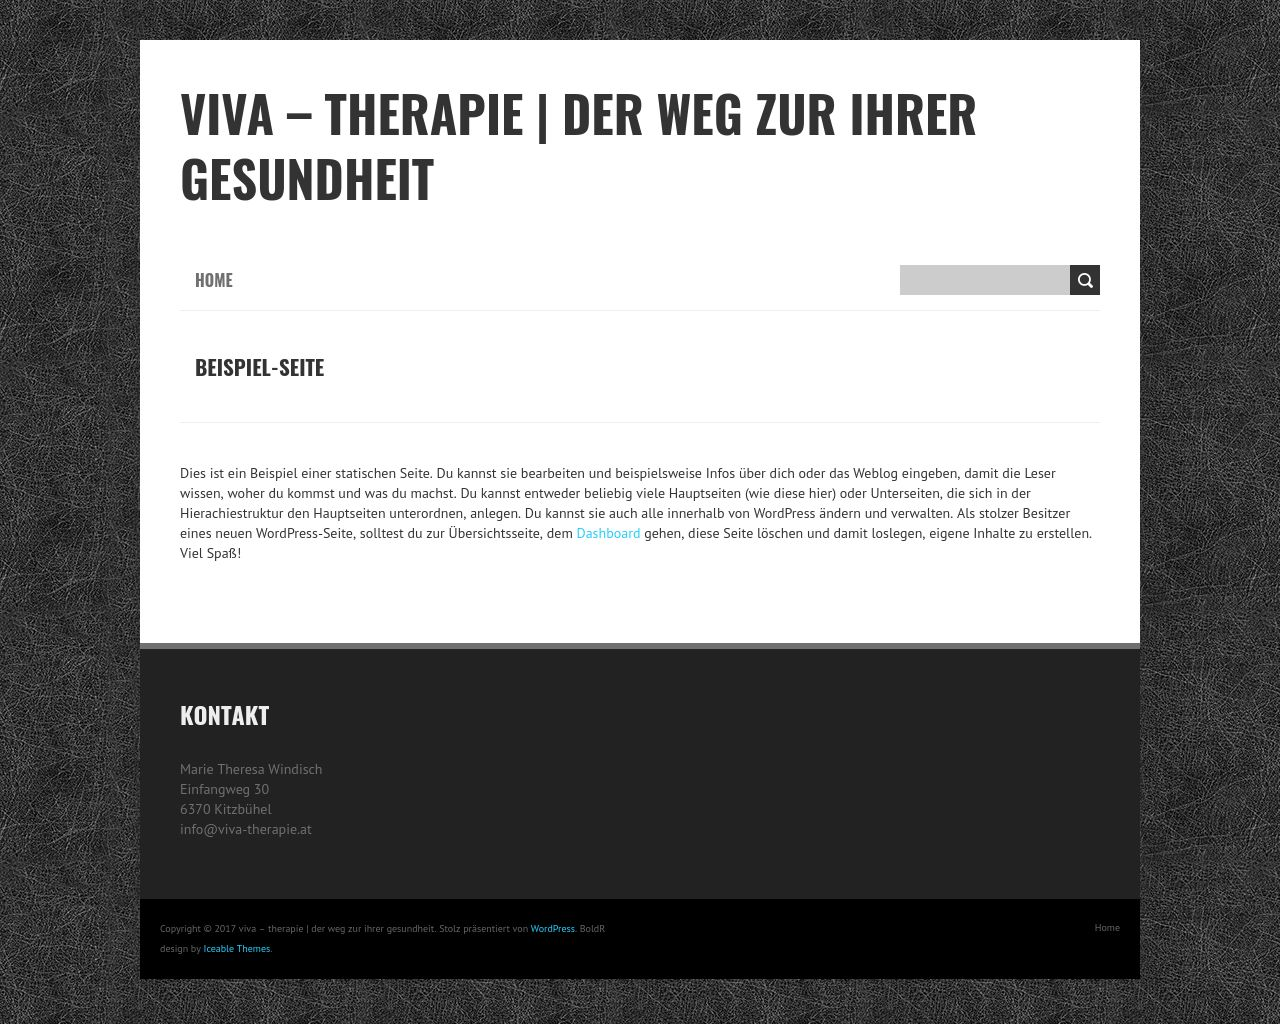 Bild Website viva-therapie.at in 1280x1024